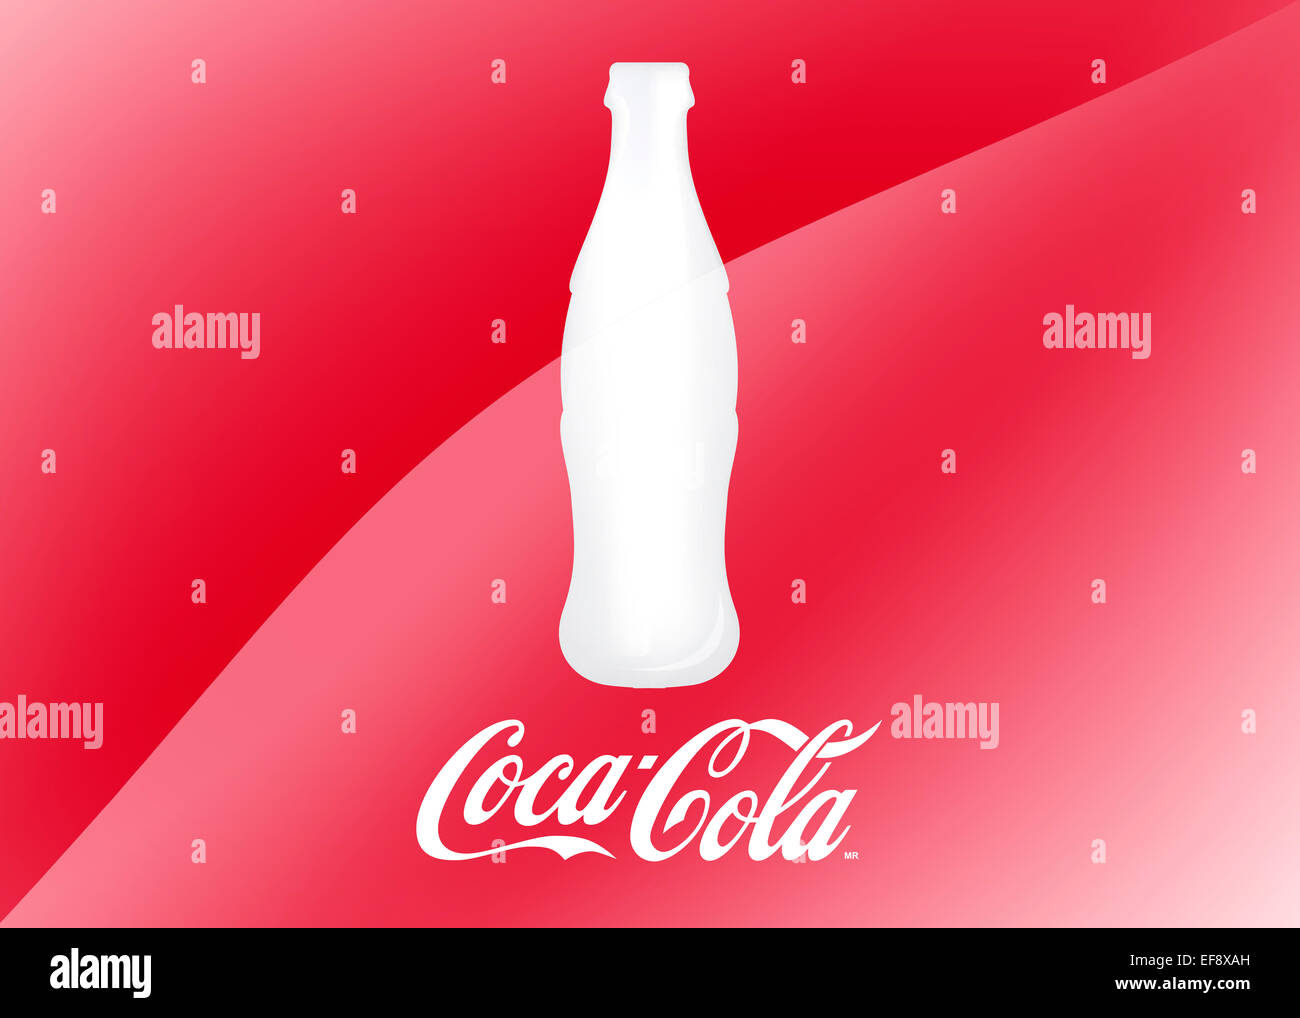 Coca Cola logo icon flag emblem symbol Stock Photo